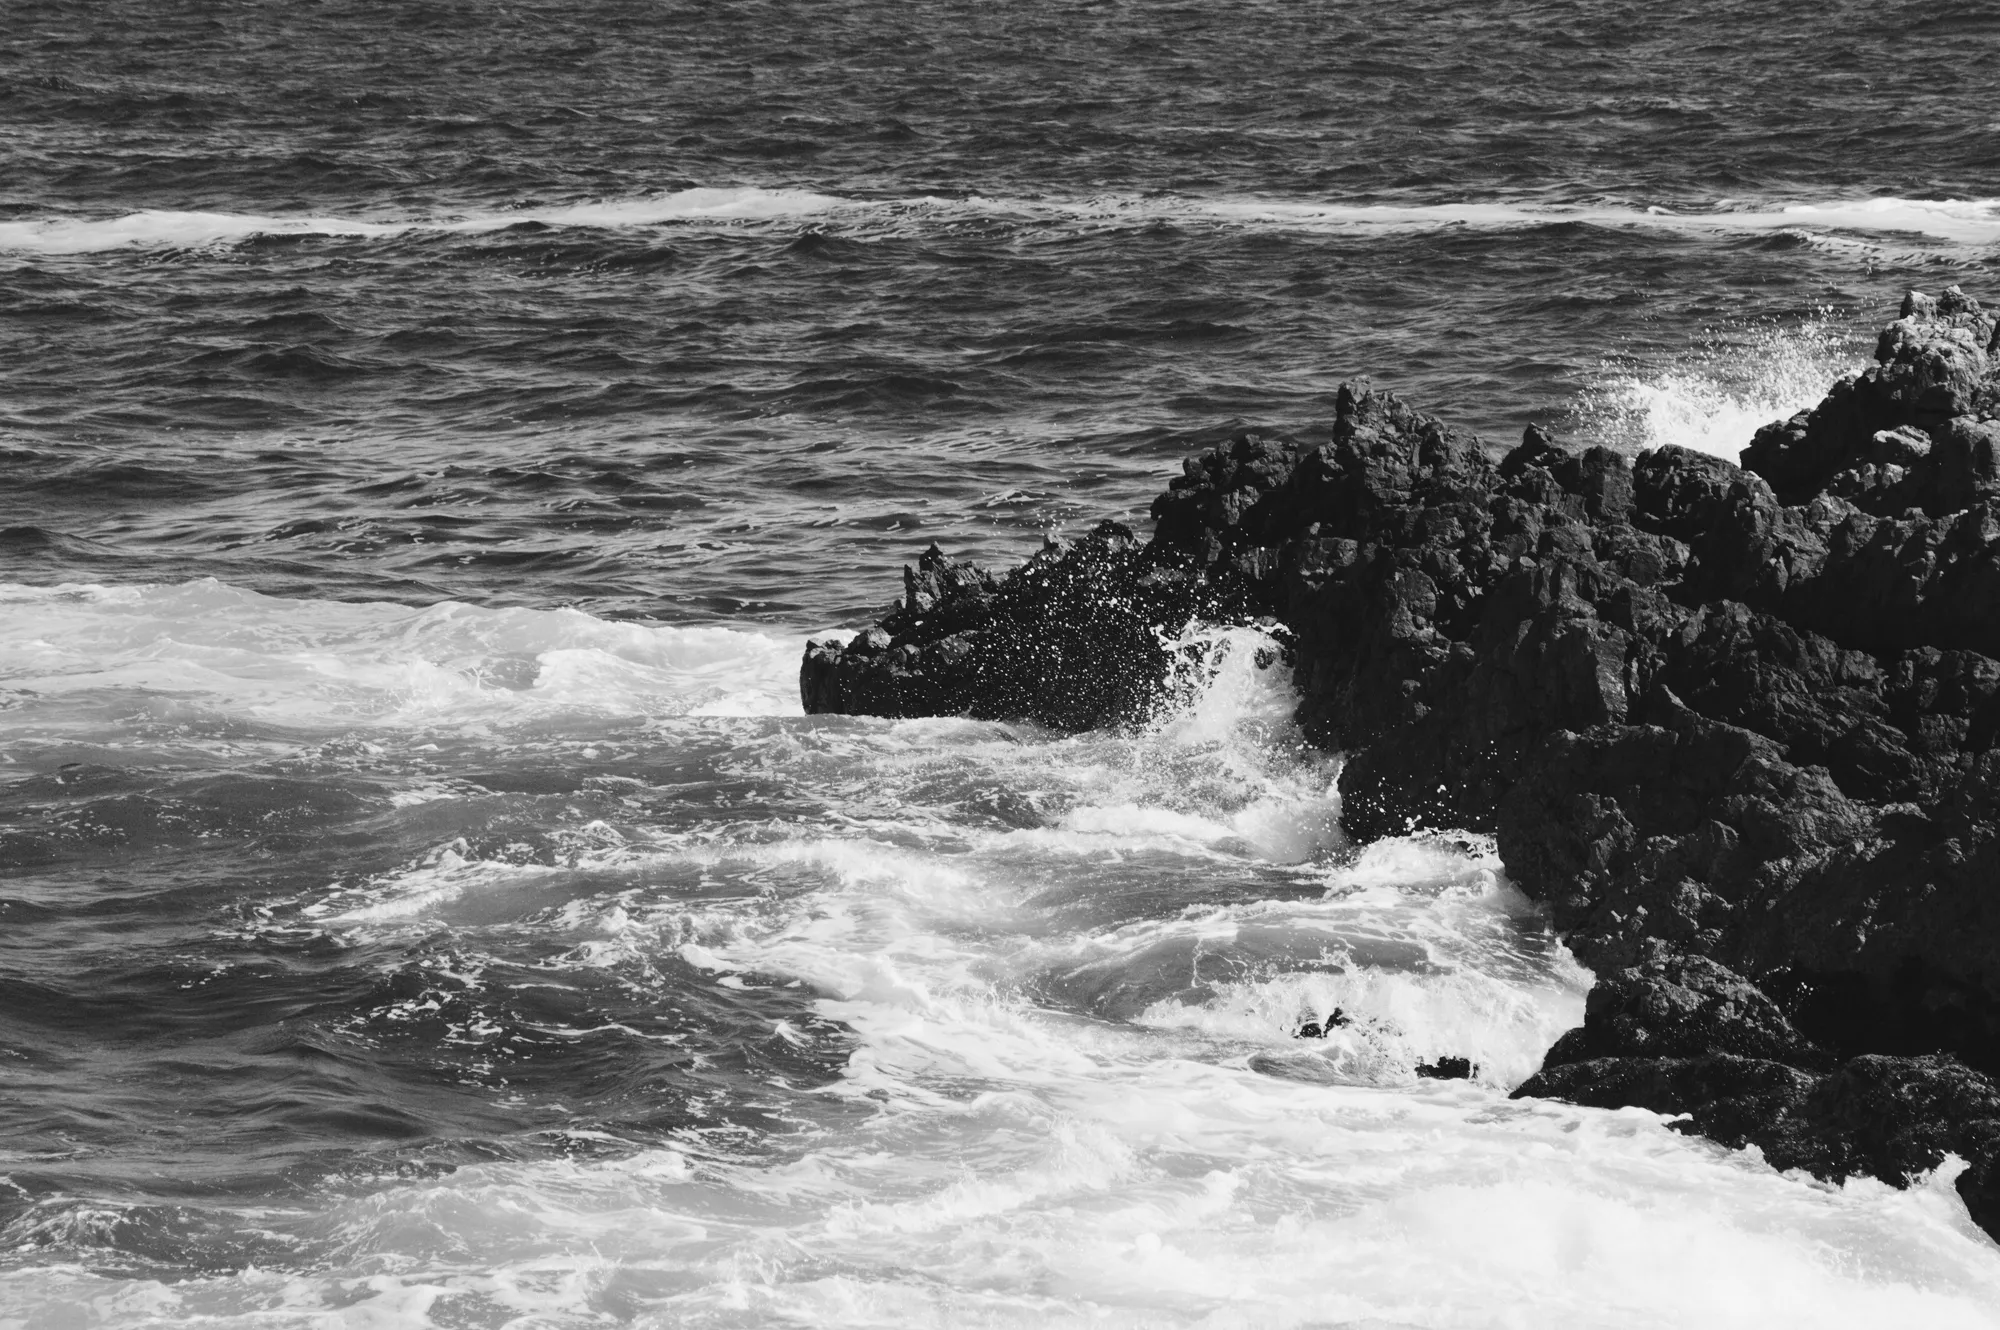 2018-12-25 - Cape Town - Waves against rocks